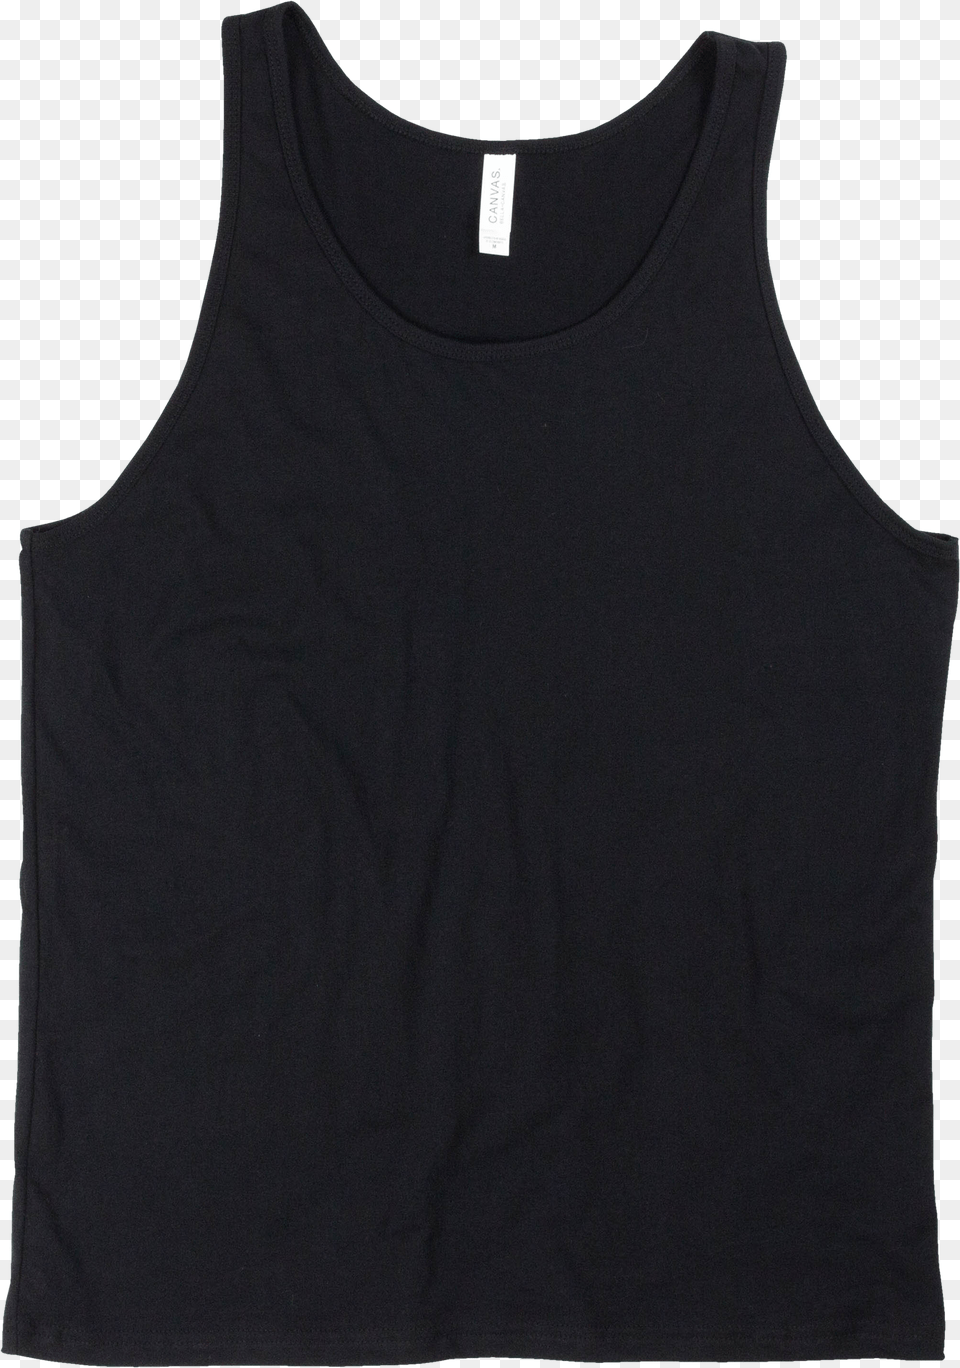 Home Custom Shirts Top, Clothing, Tank Top, Undershirt, Vest Png Image